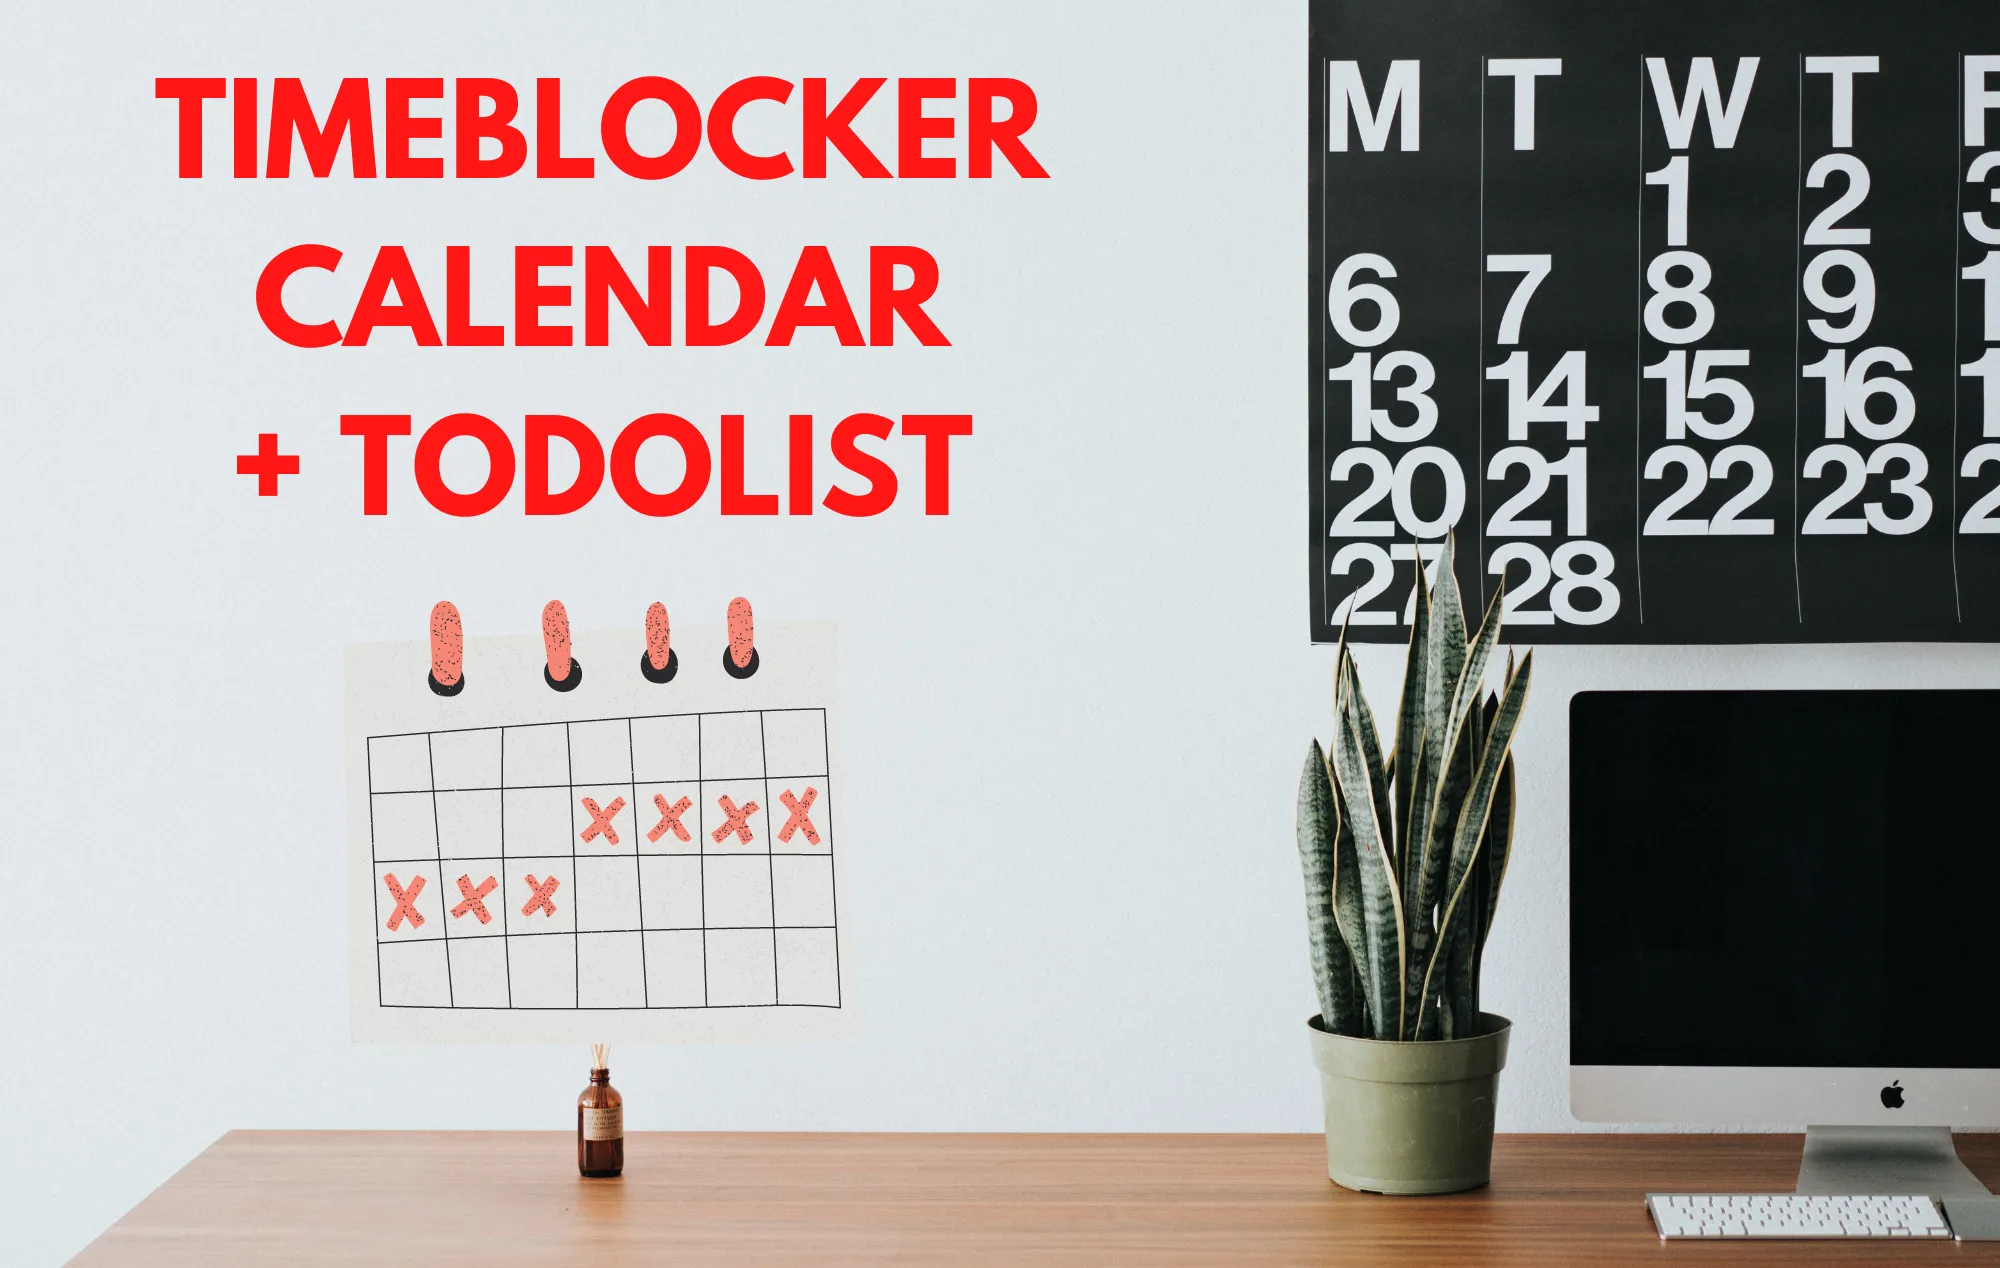 Calendar on the wall with text Timeblocker Calendar plus Todolist